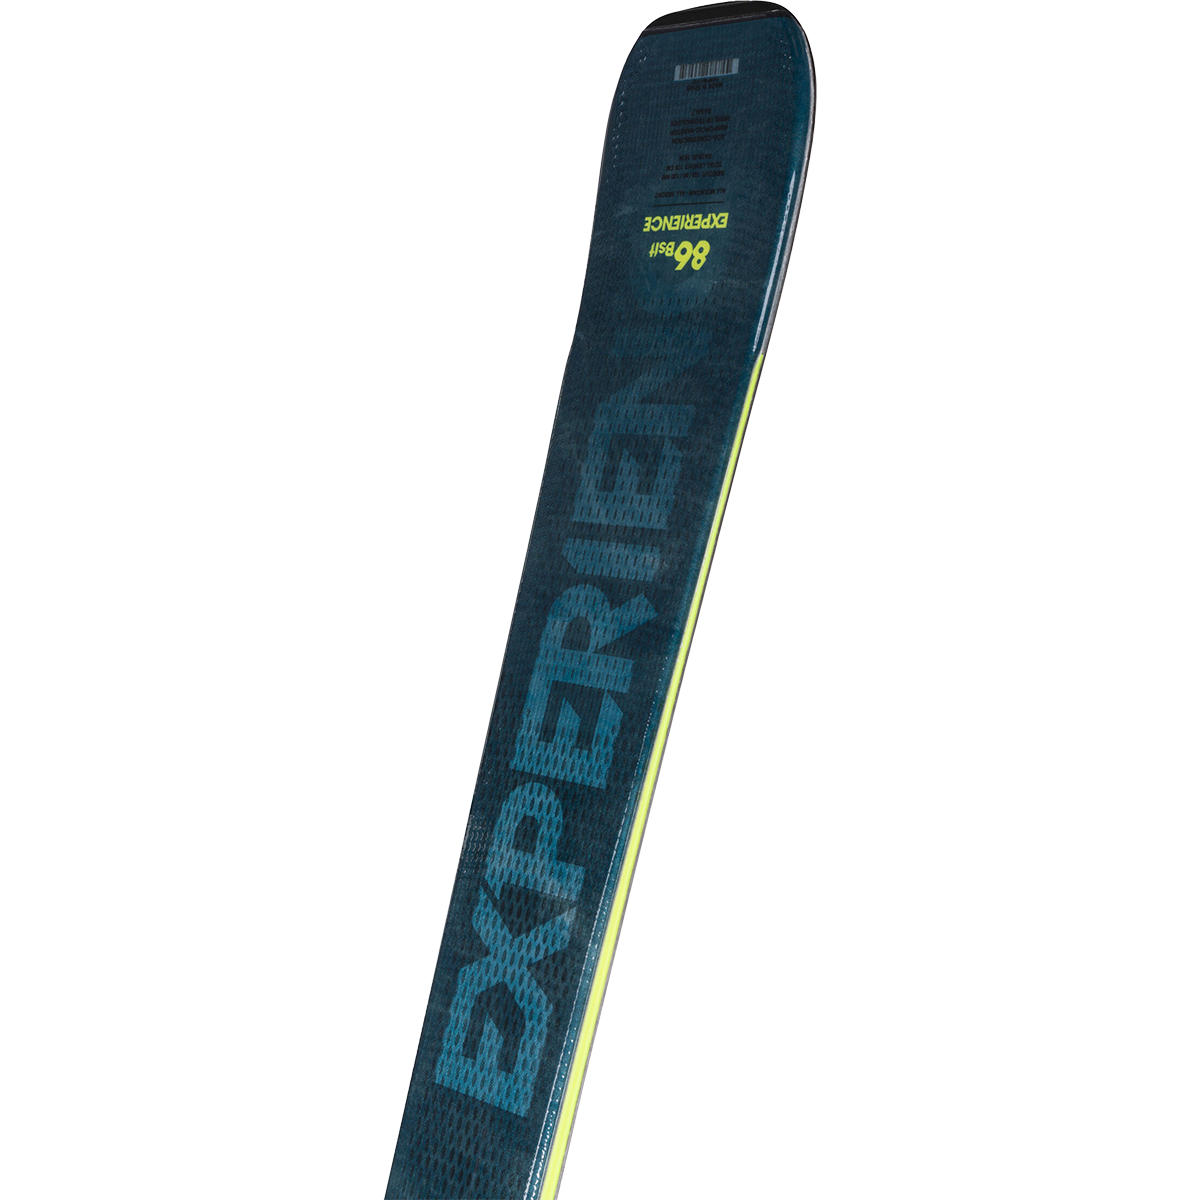 Experience 86 Basalt (KONECT) Ski with SPX12 Bindings alternate view